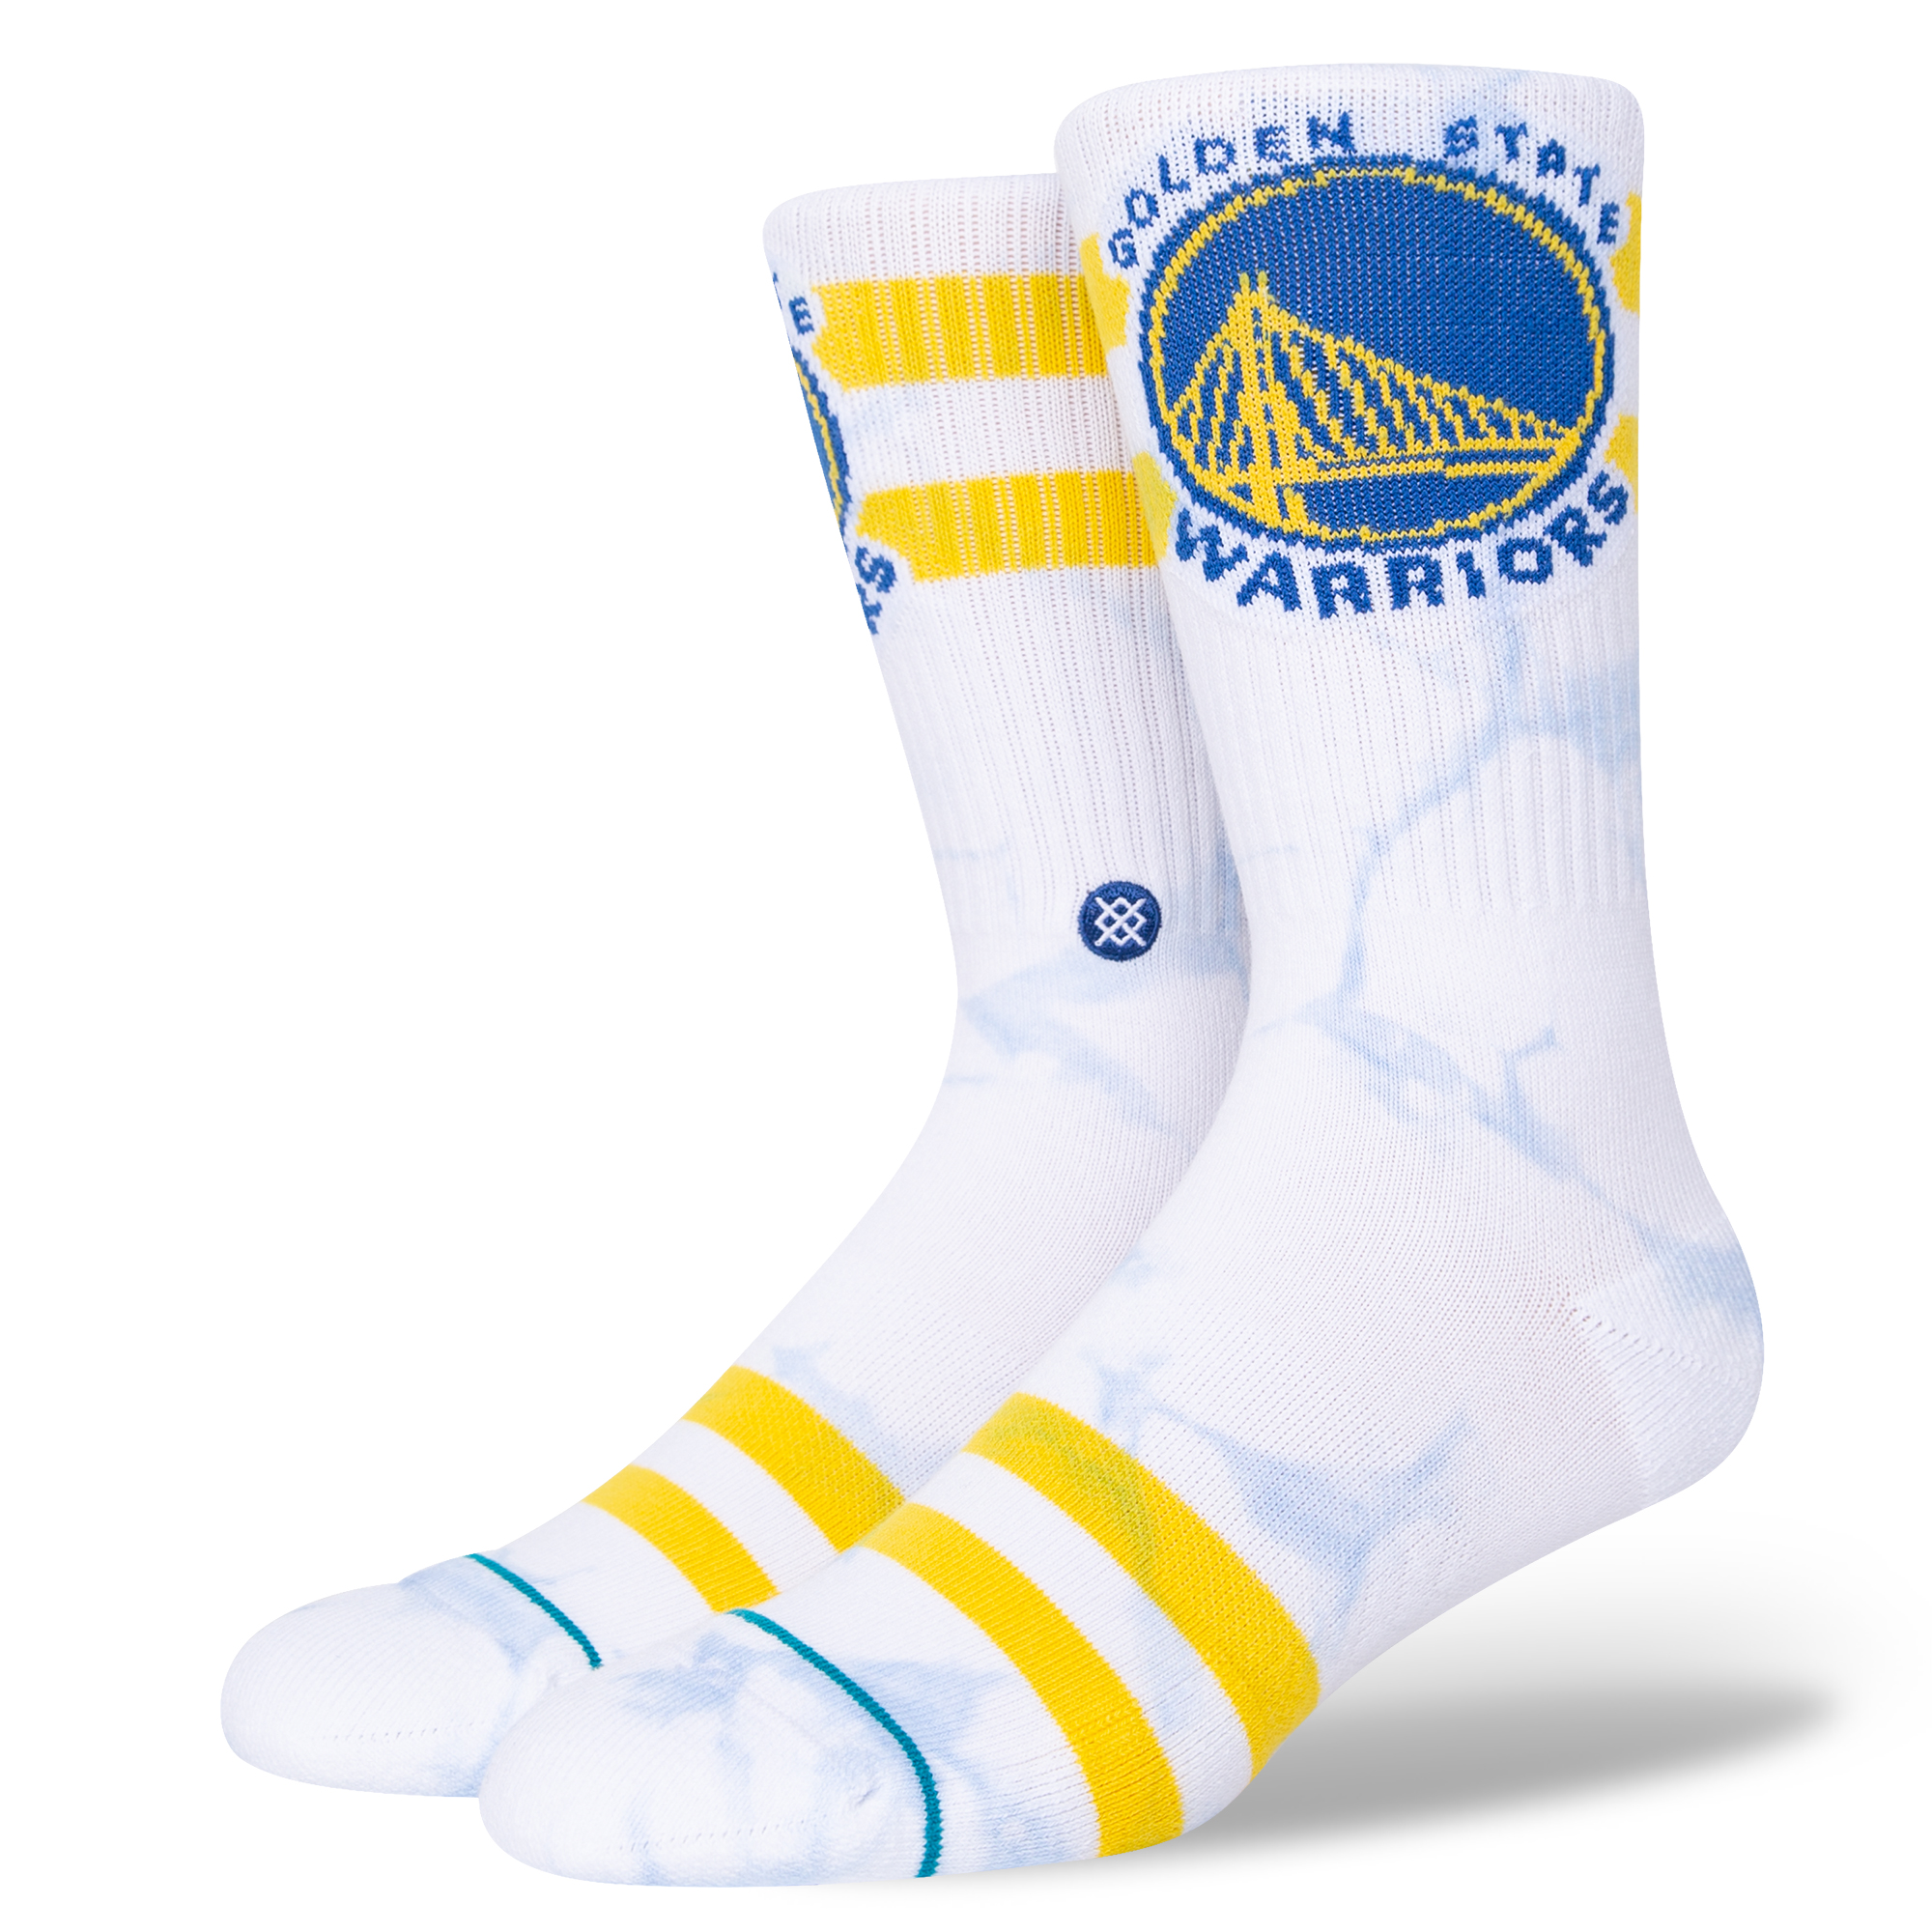 Nba Golden State Warriors Large Crew Socks : Target